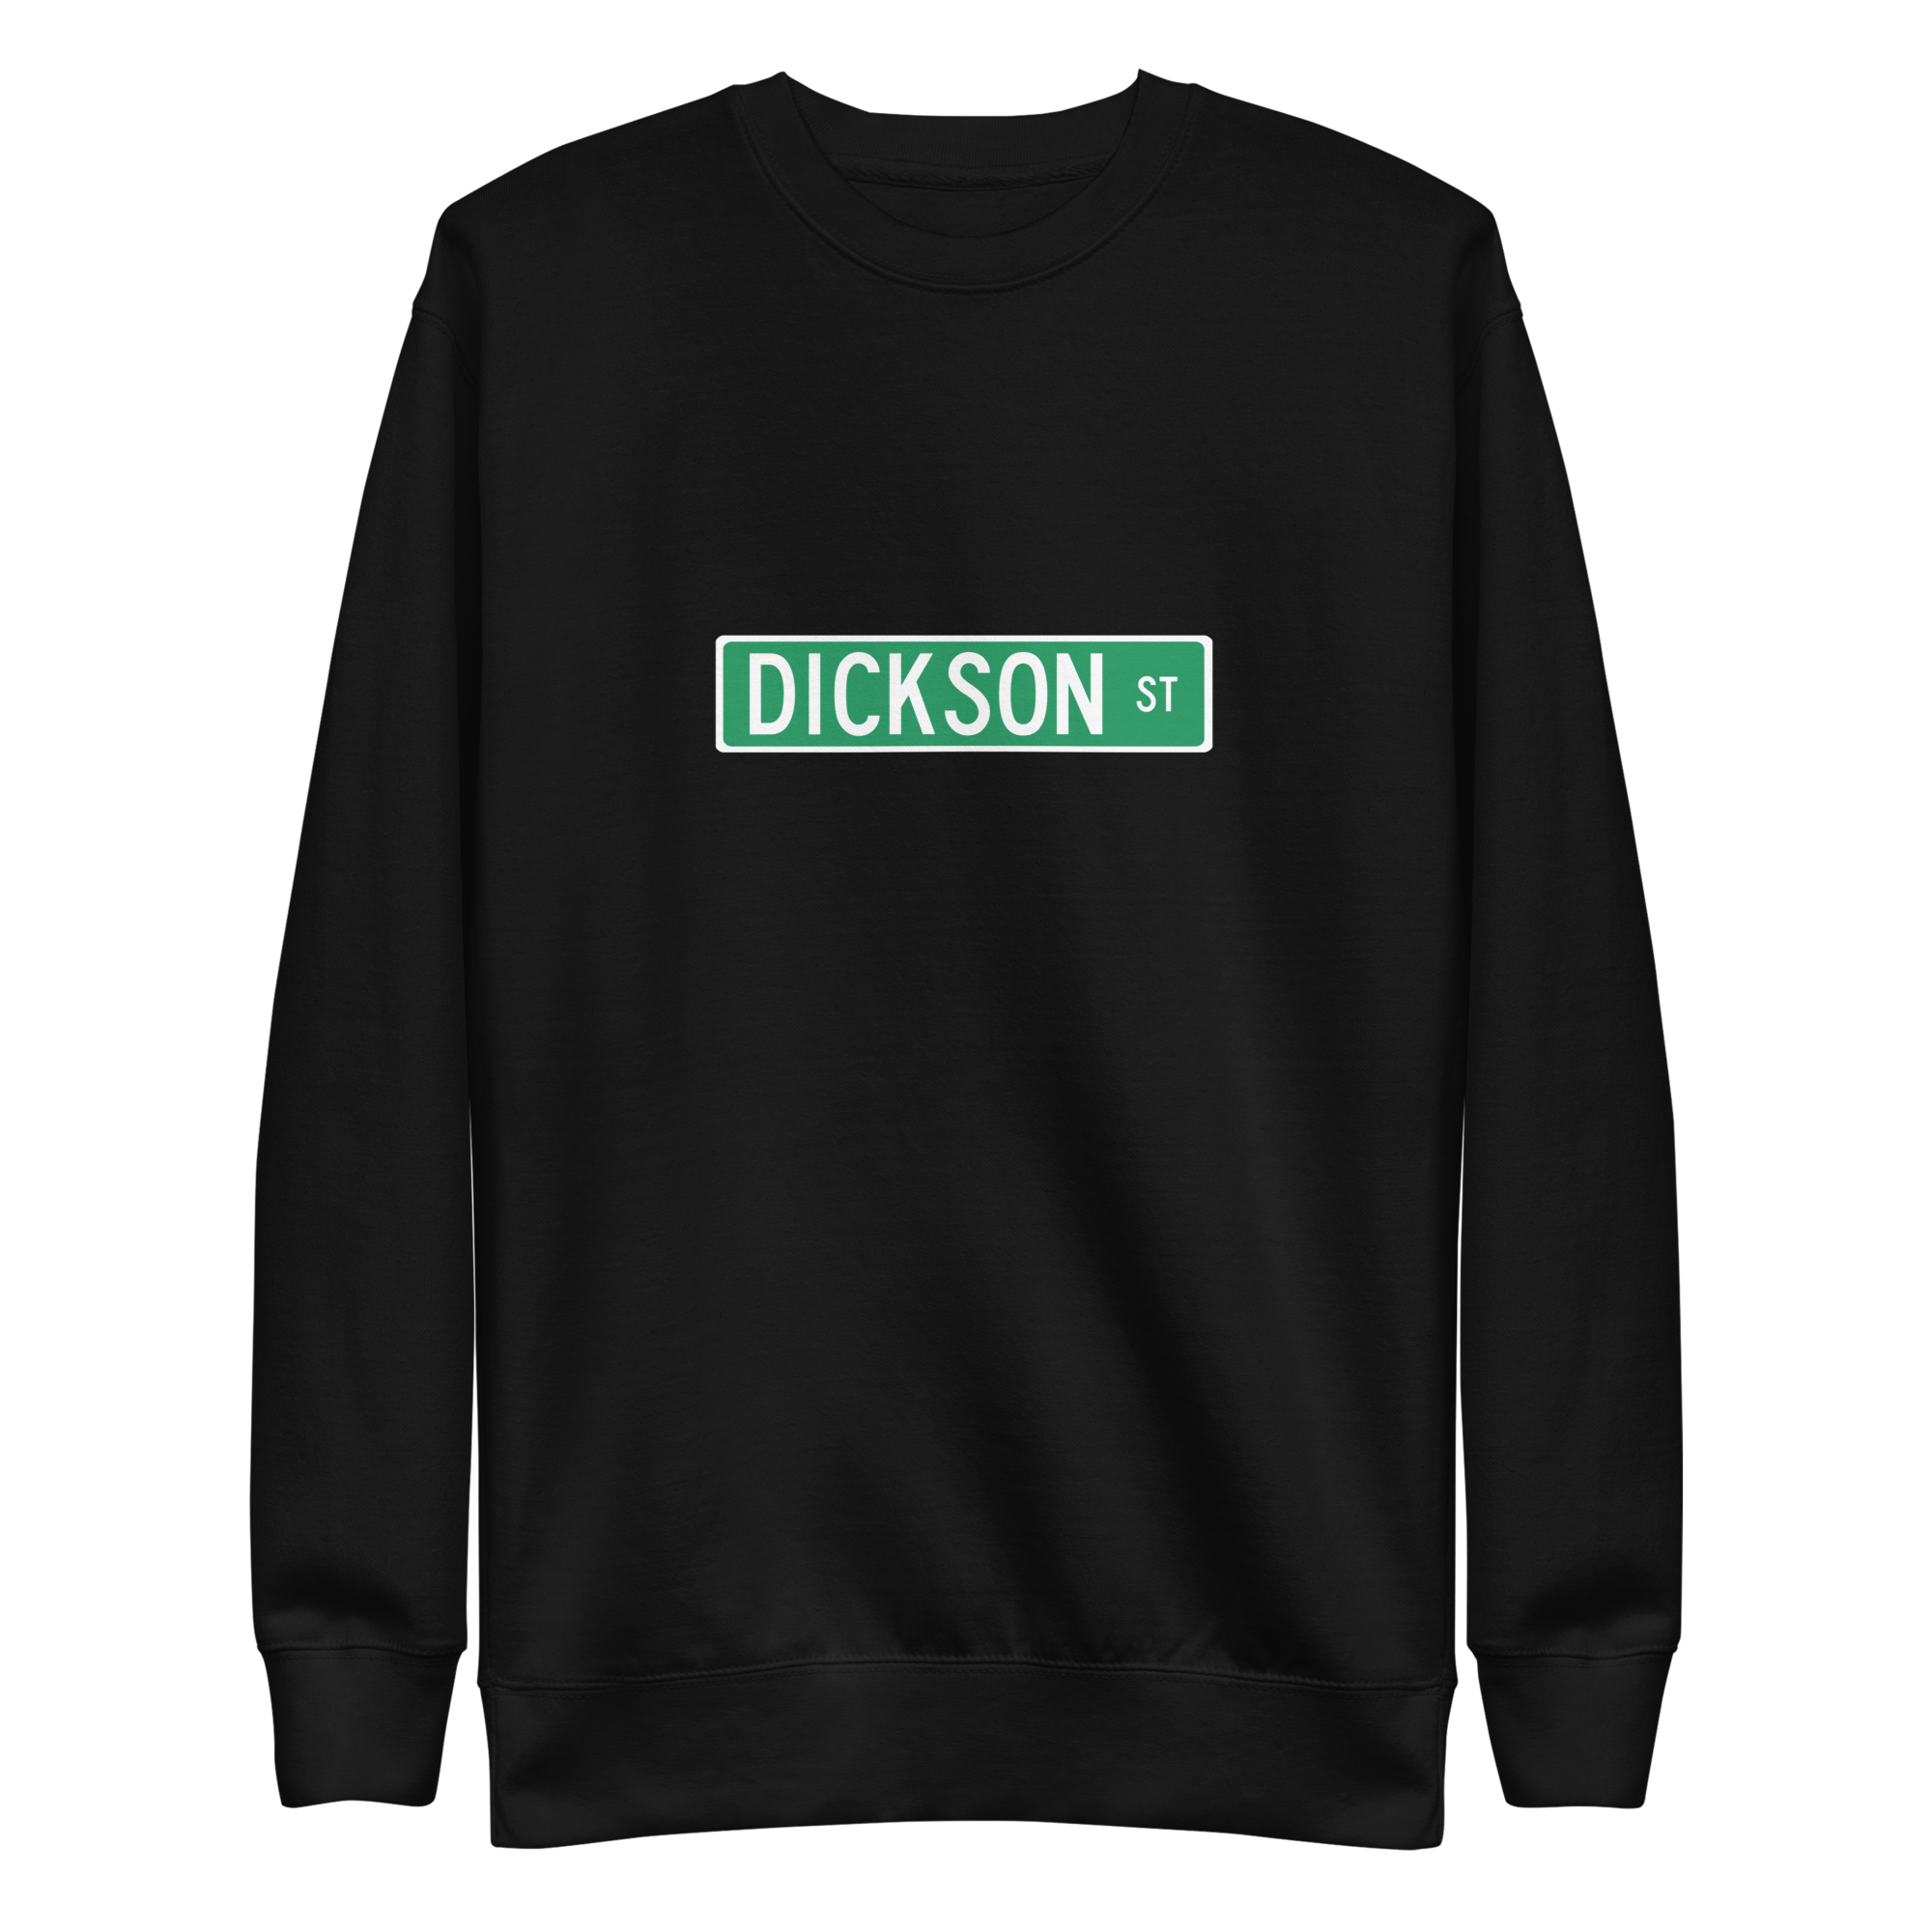 Dickson Street Sign Unisex Premium Sweatshirt